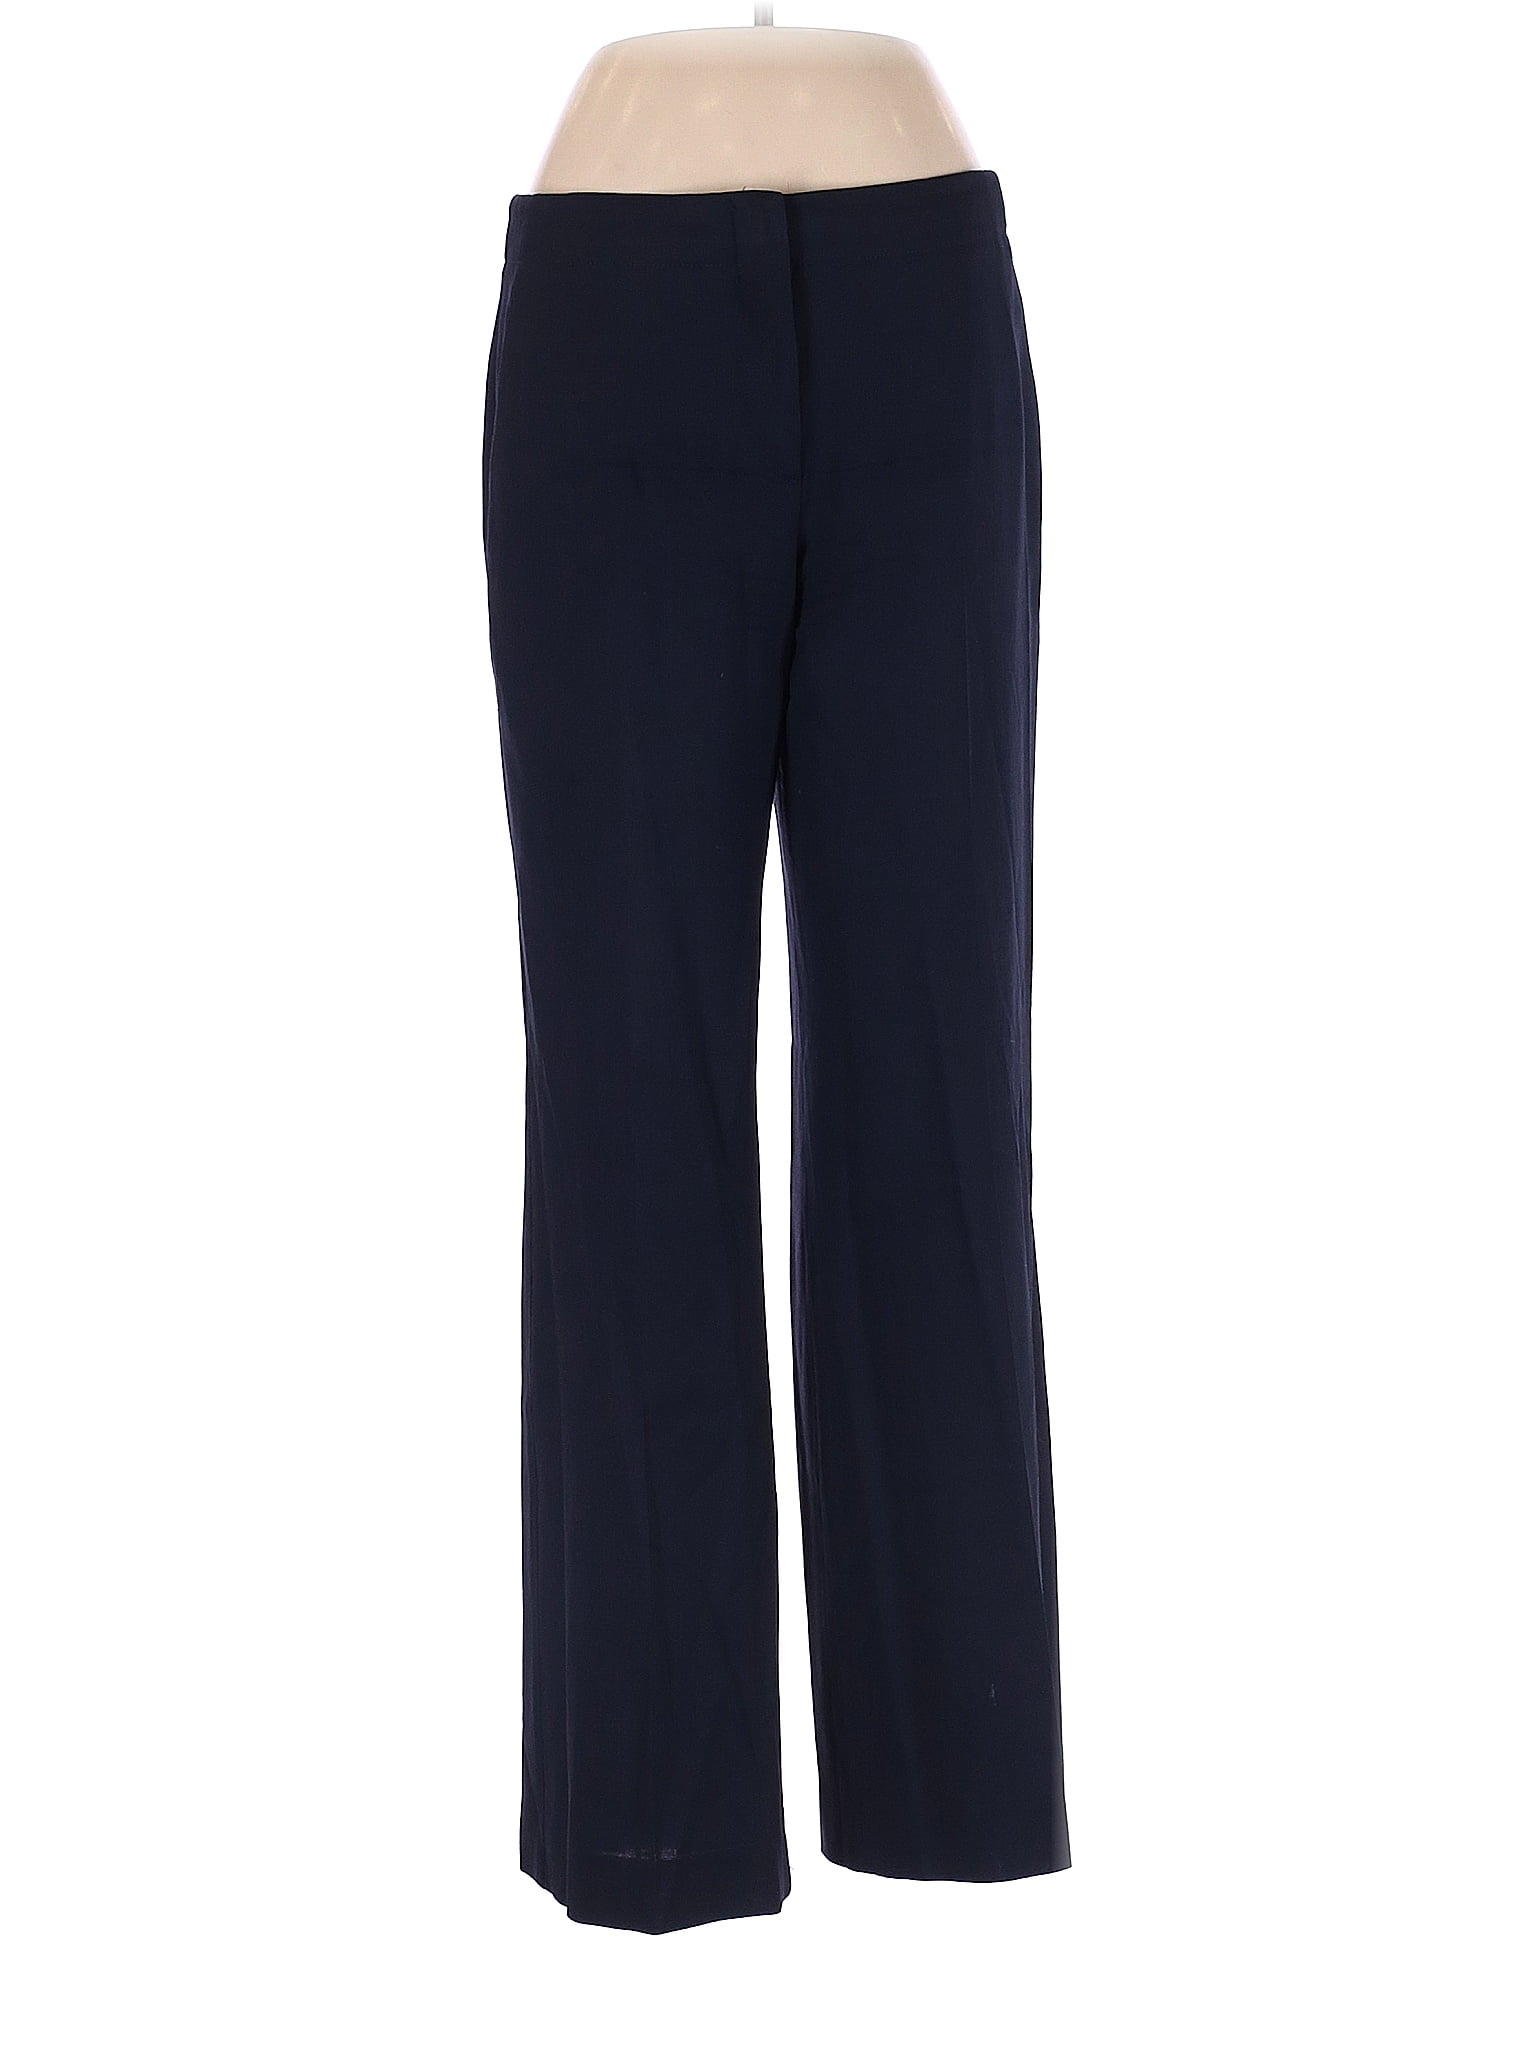 Theory 100% Virgin Wool Polka Dots Navy Blue Wool Pants Size 8 - 87% ...